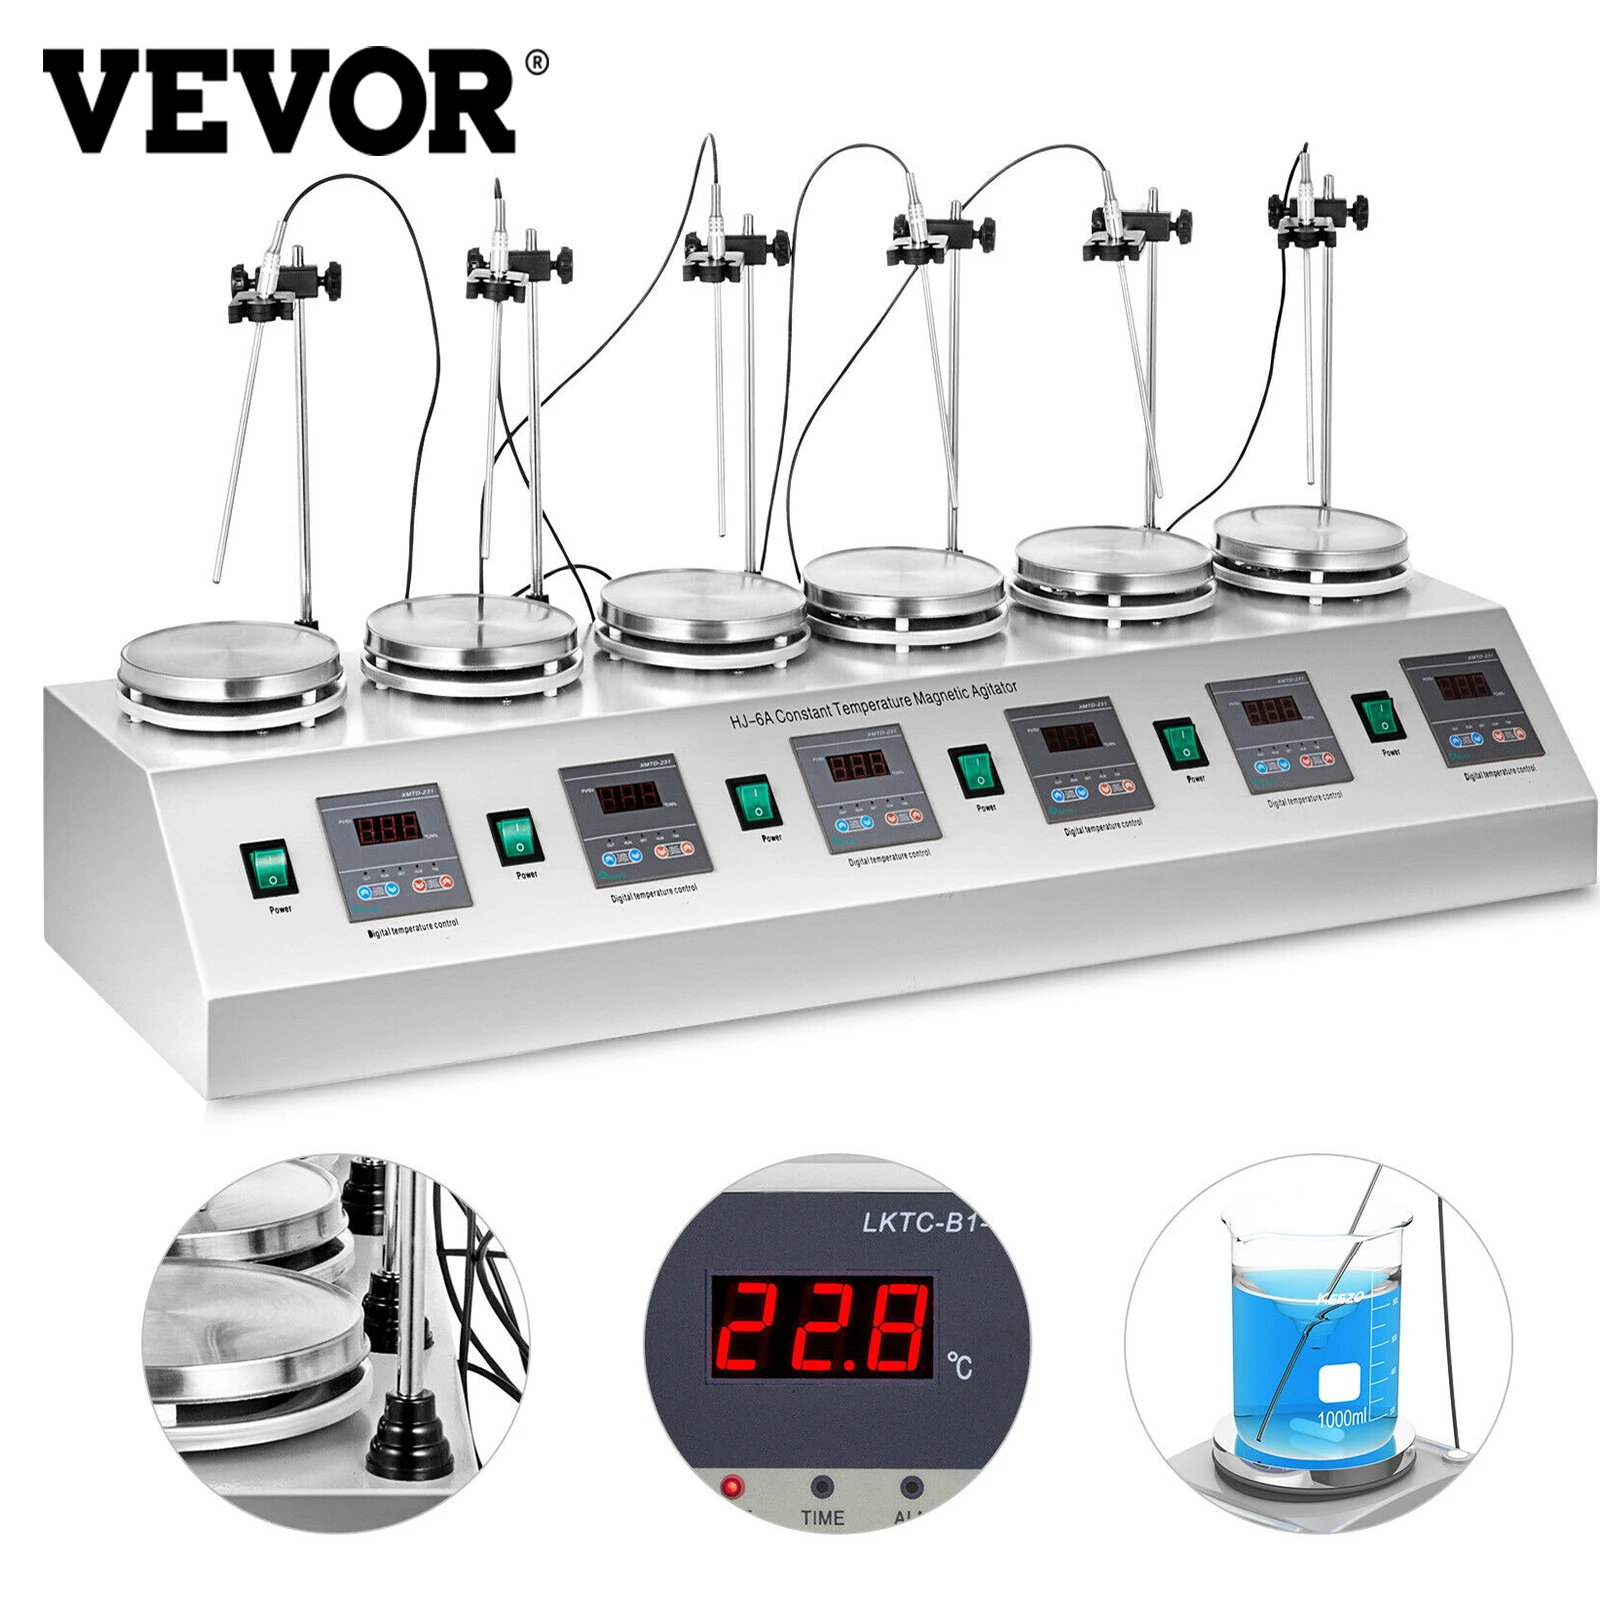 

VEVOR Electric Magnetic Stirrer Portable Blender with Heating Plate 85-1/2/4/6 Heads Multi Unit Digital Mixer Display for Lab